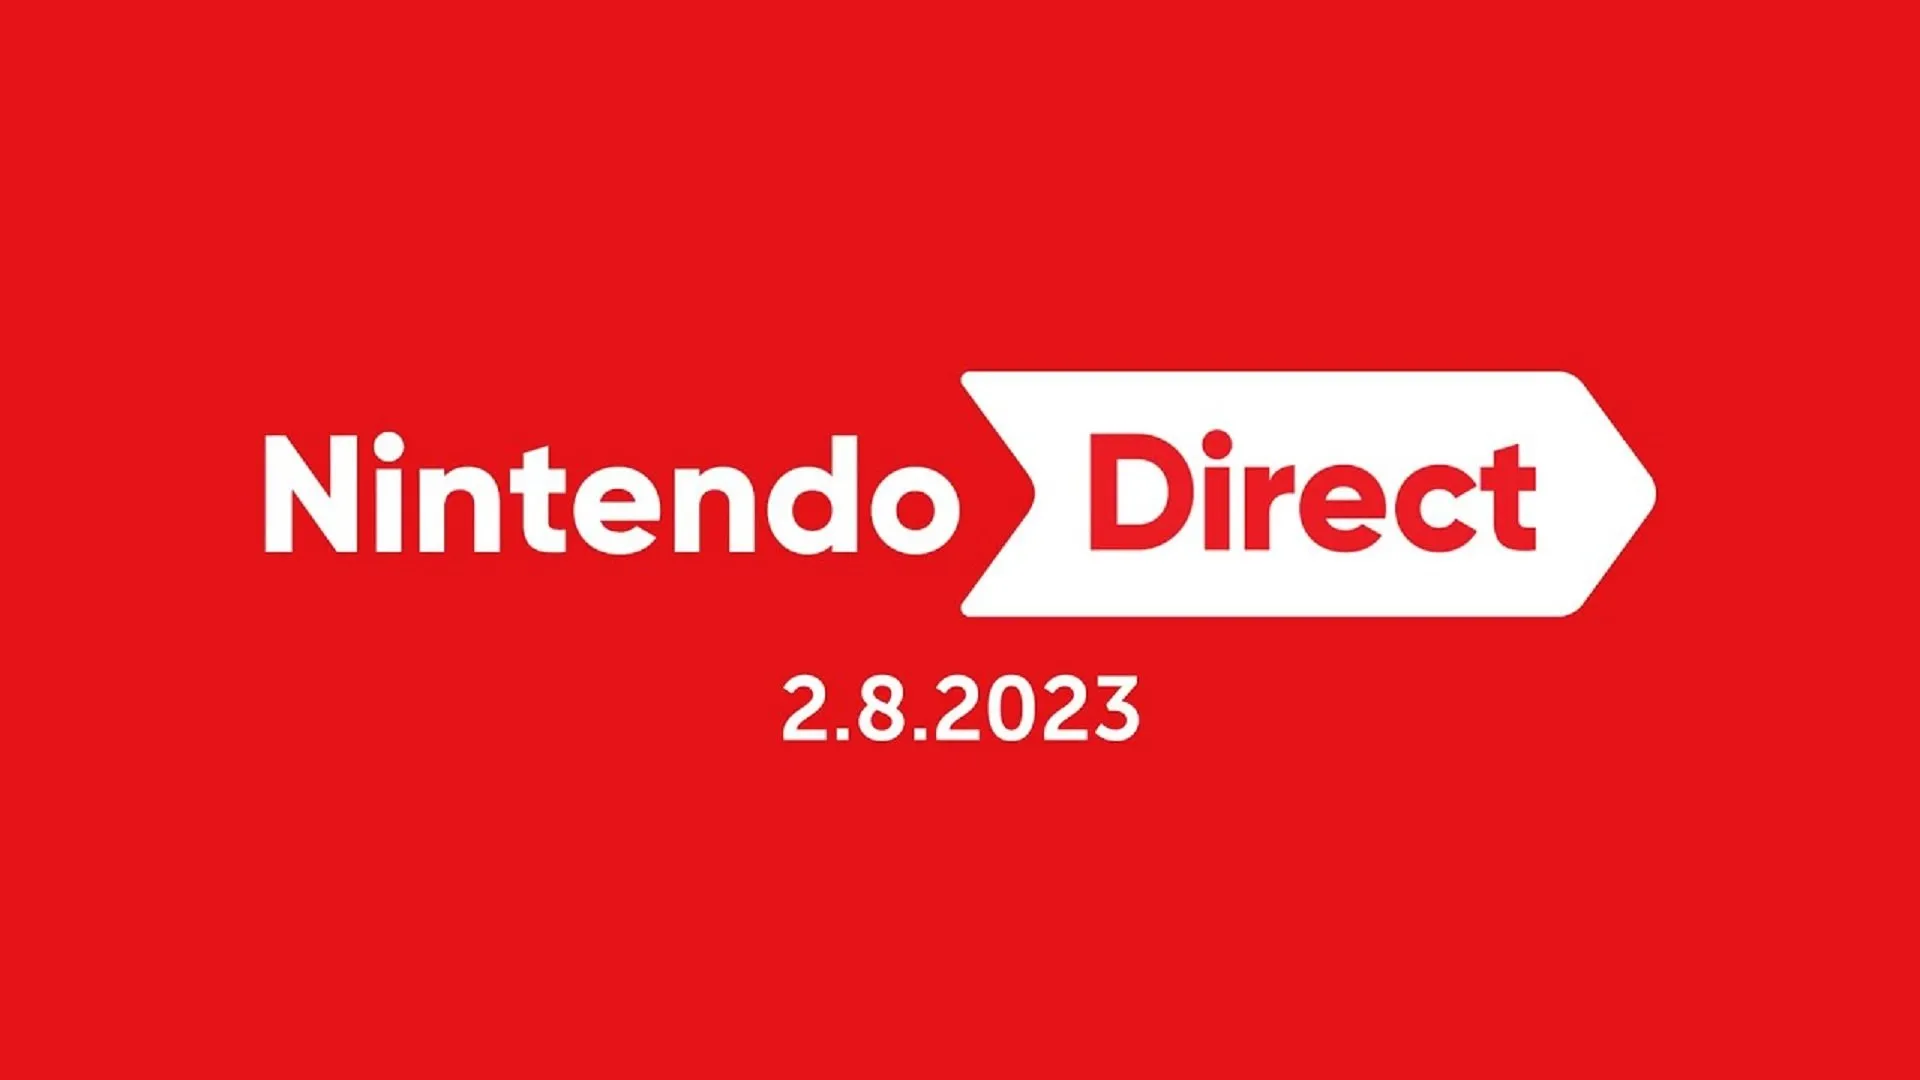 Nintendo Direct new